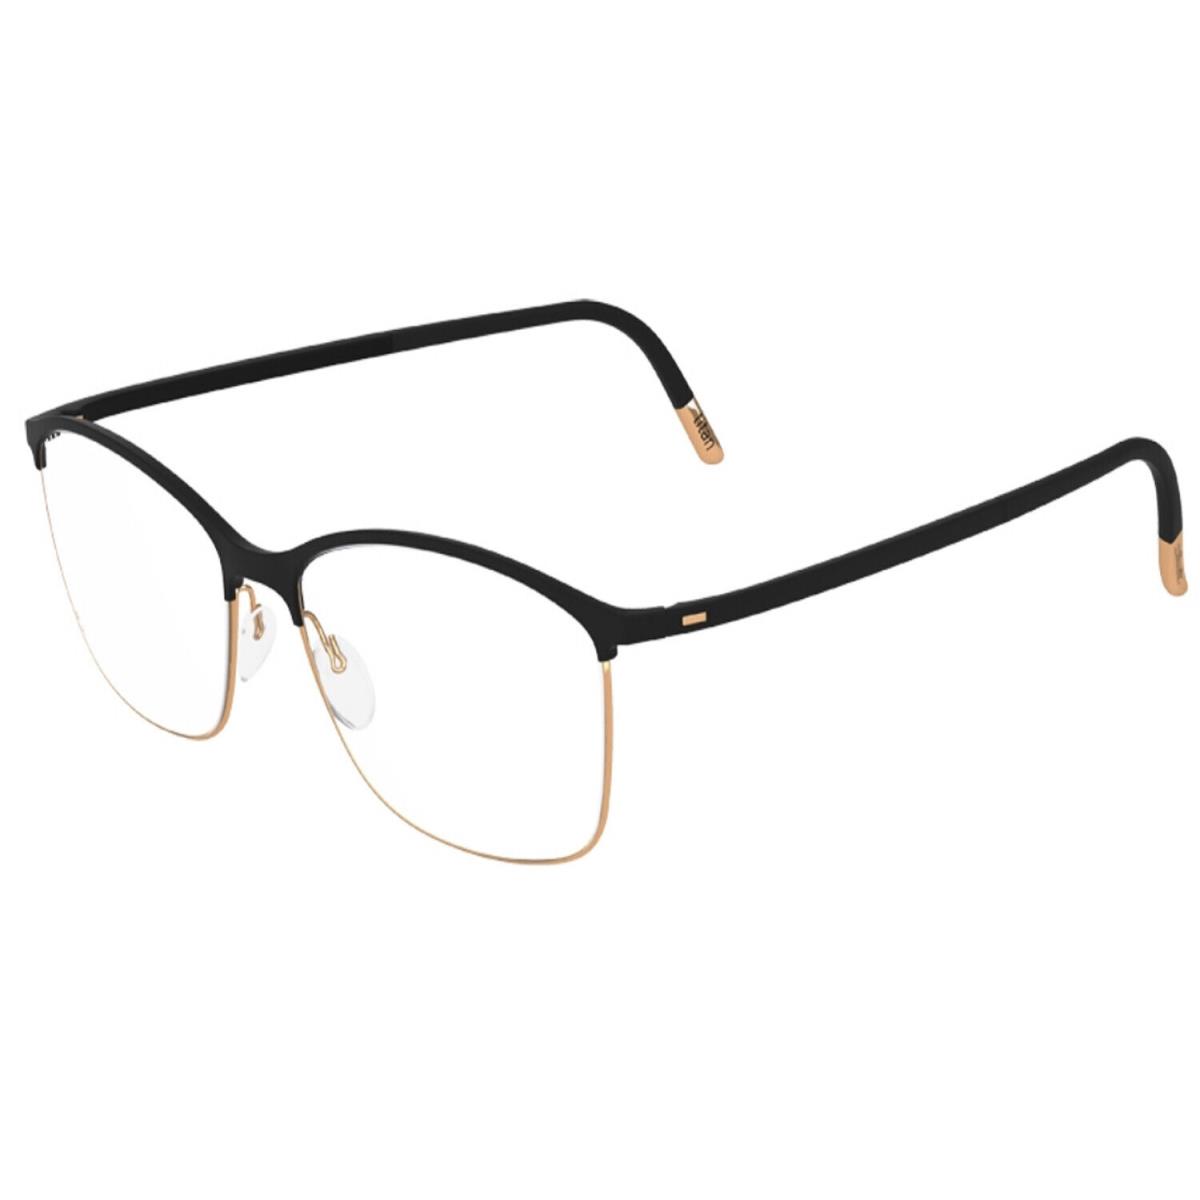 Silhouette Eyeglasses Urban Fusion Full Rim 53-16-135 Black Gold 1575-6050-53MM